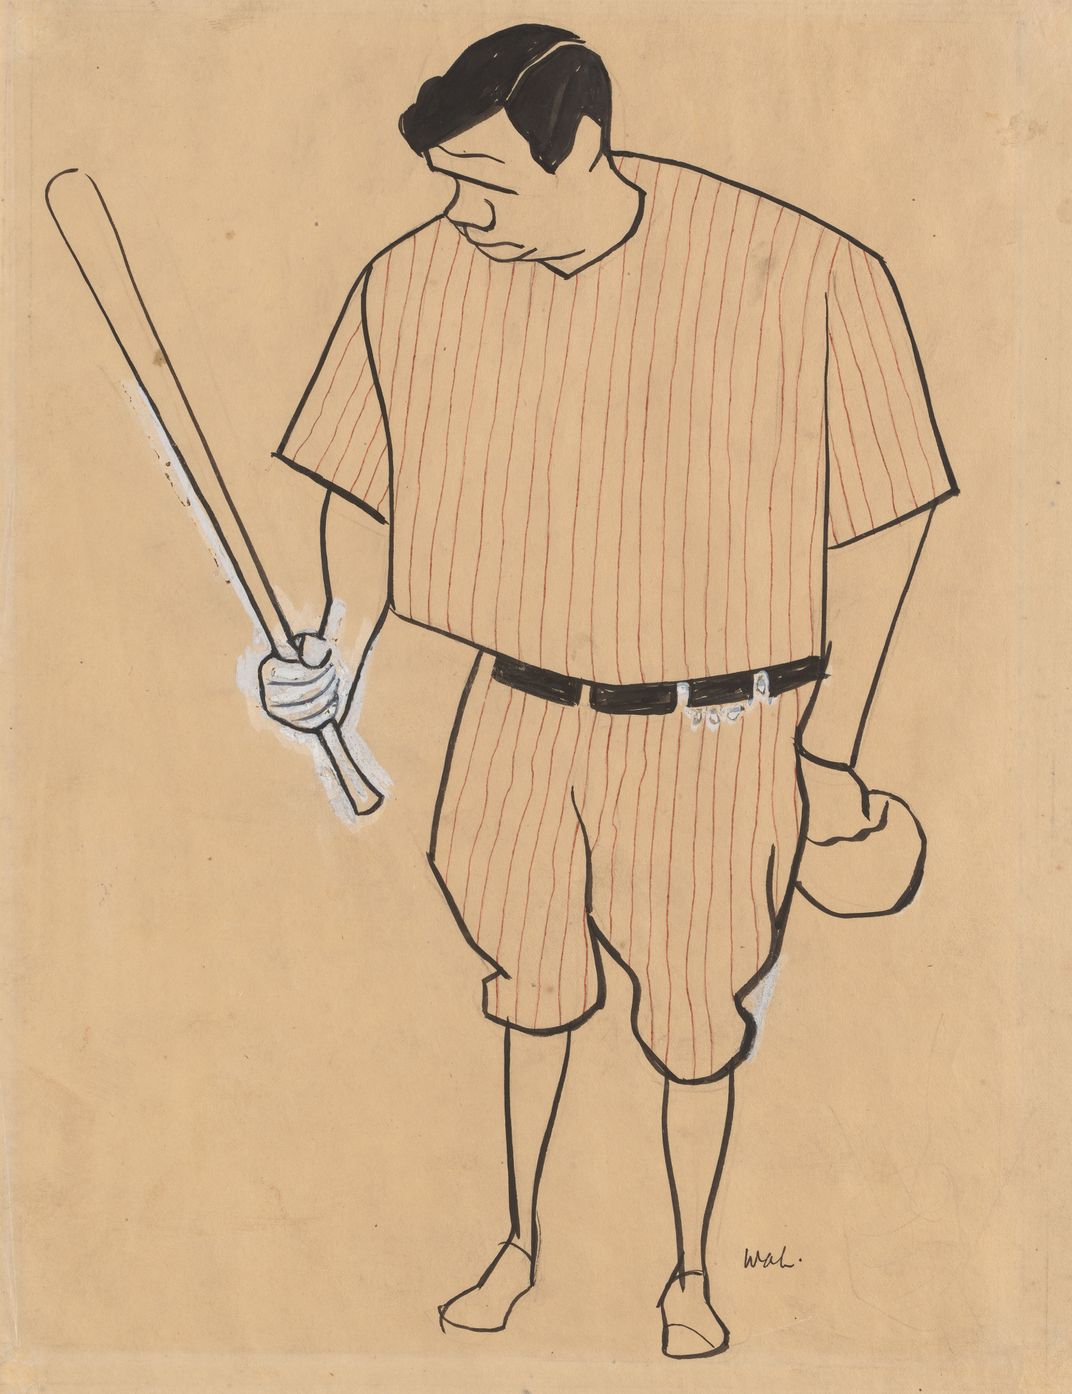 Babe Ruth, William Auerbach-Levy